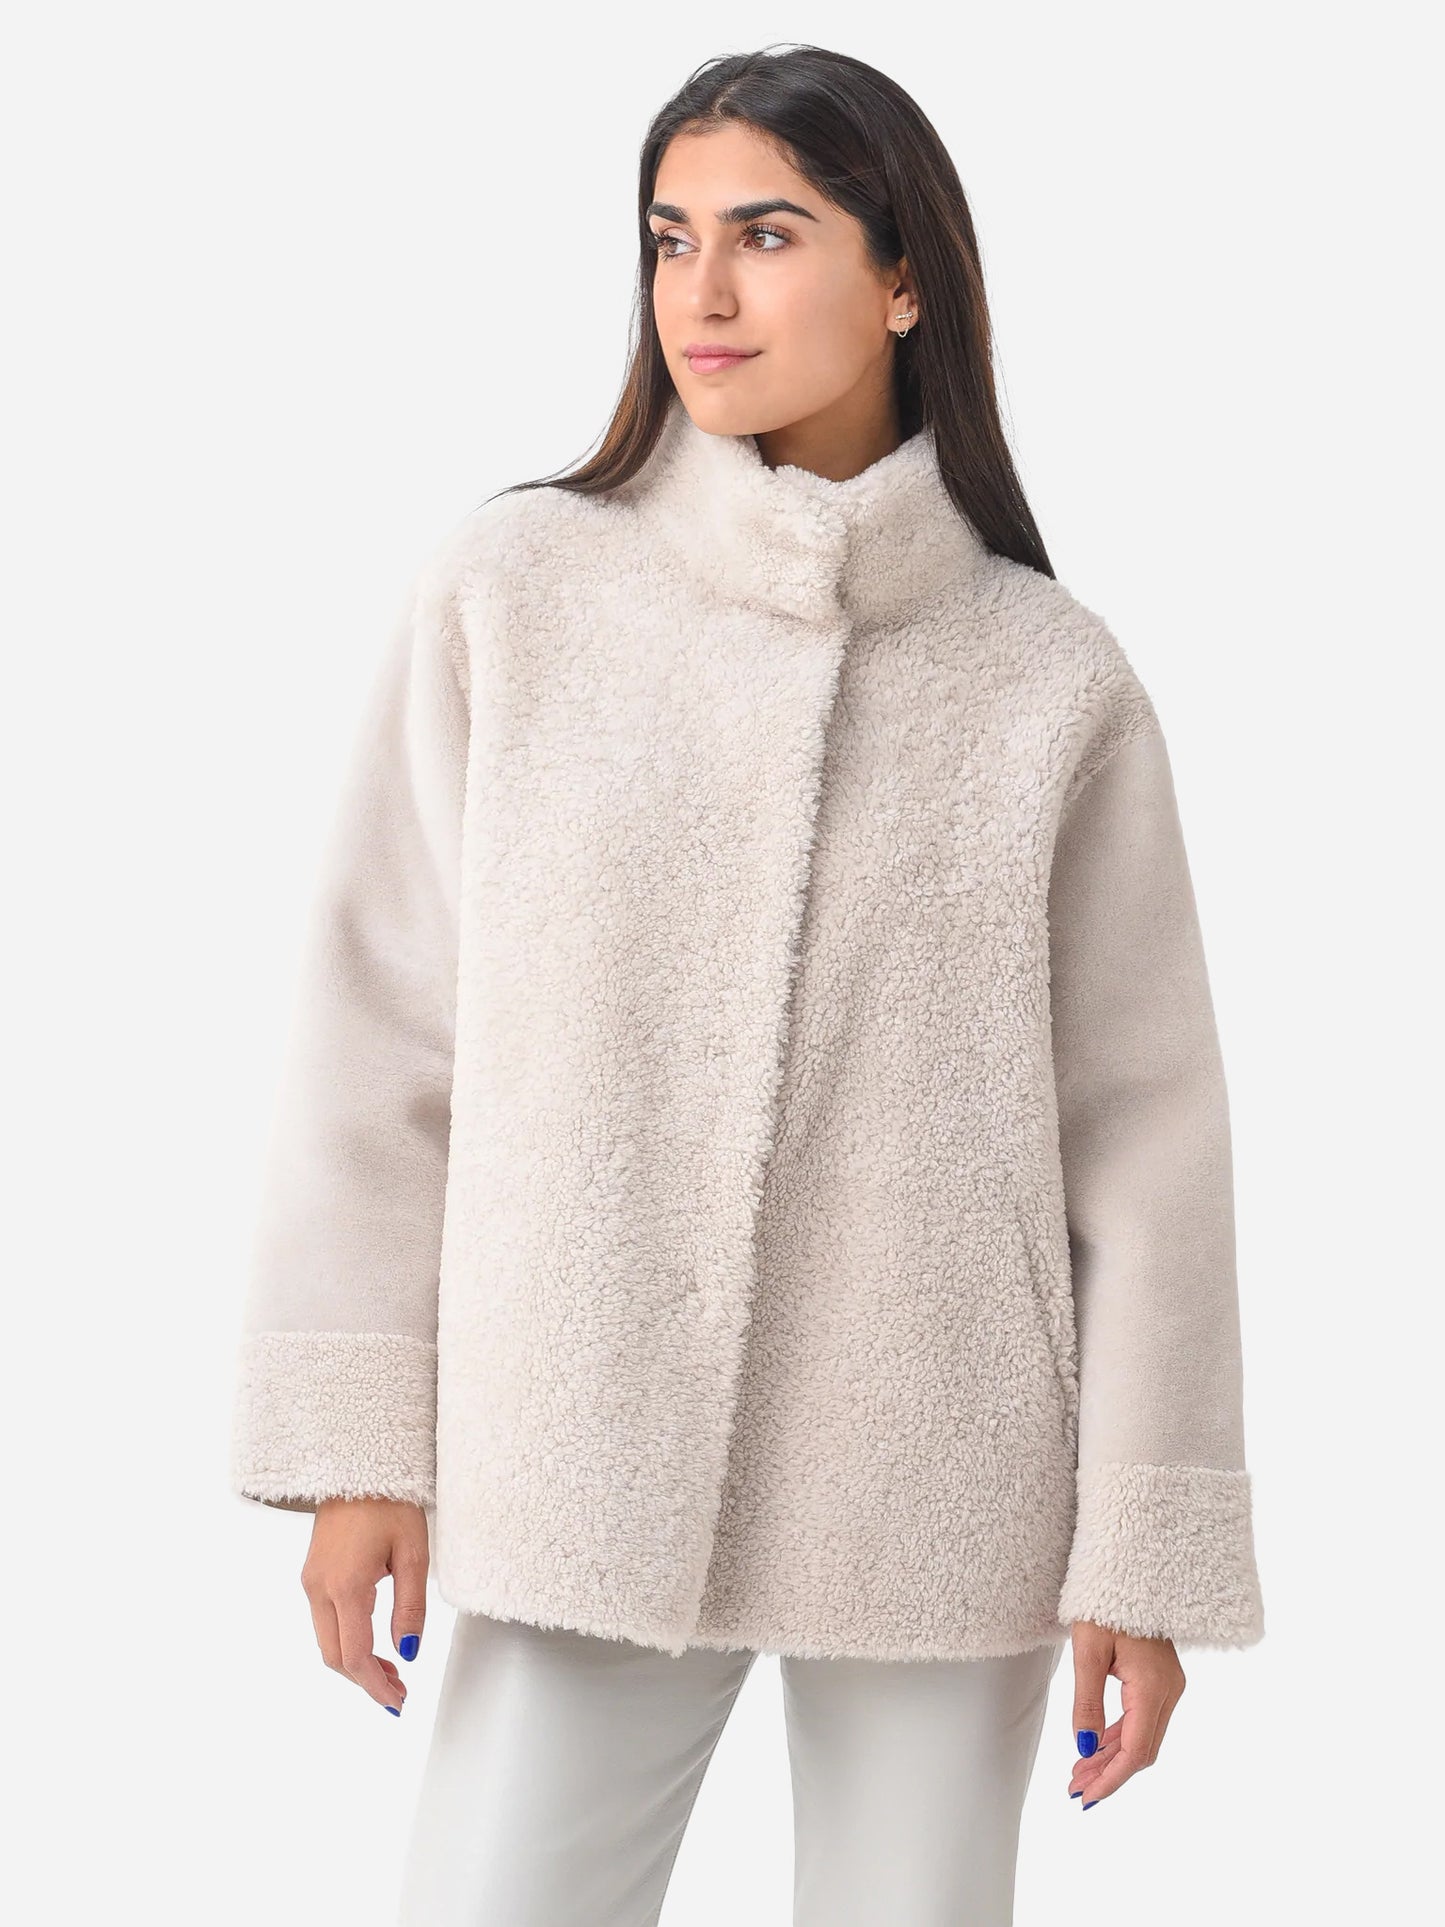 Suprema Women's Merinillo Soft Shearling Jacket